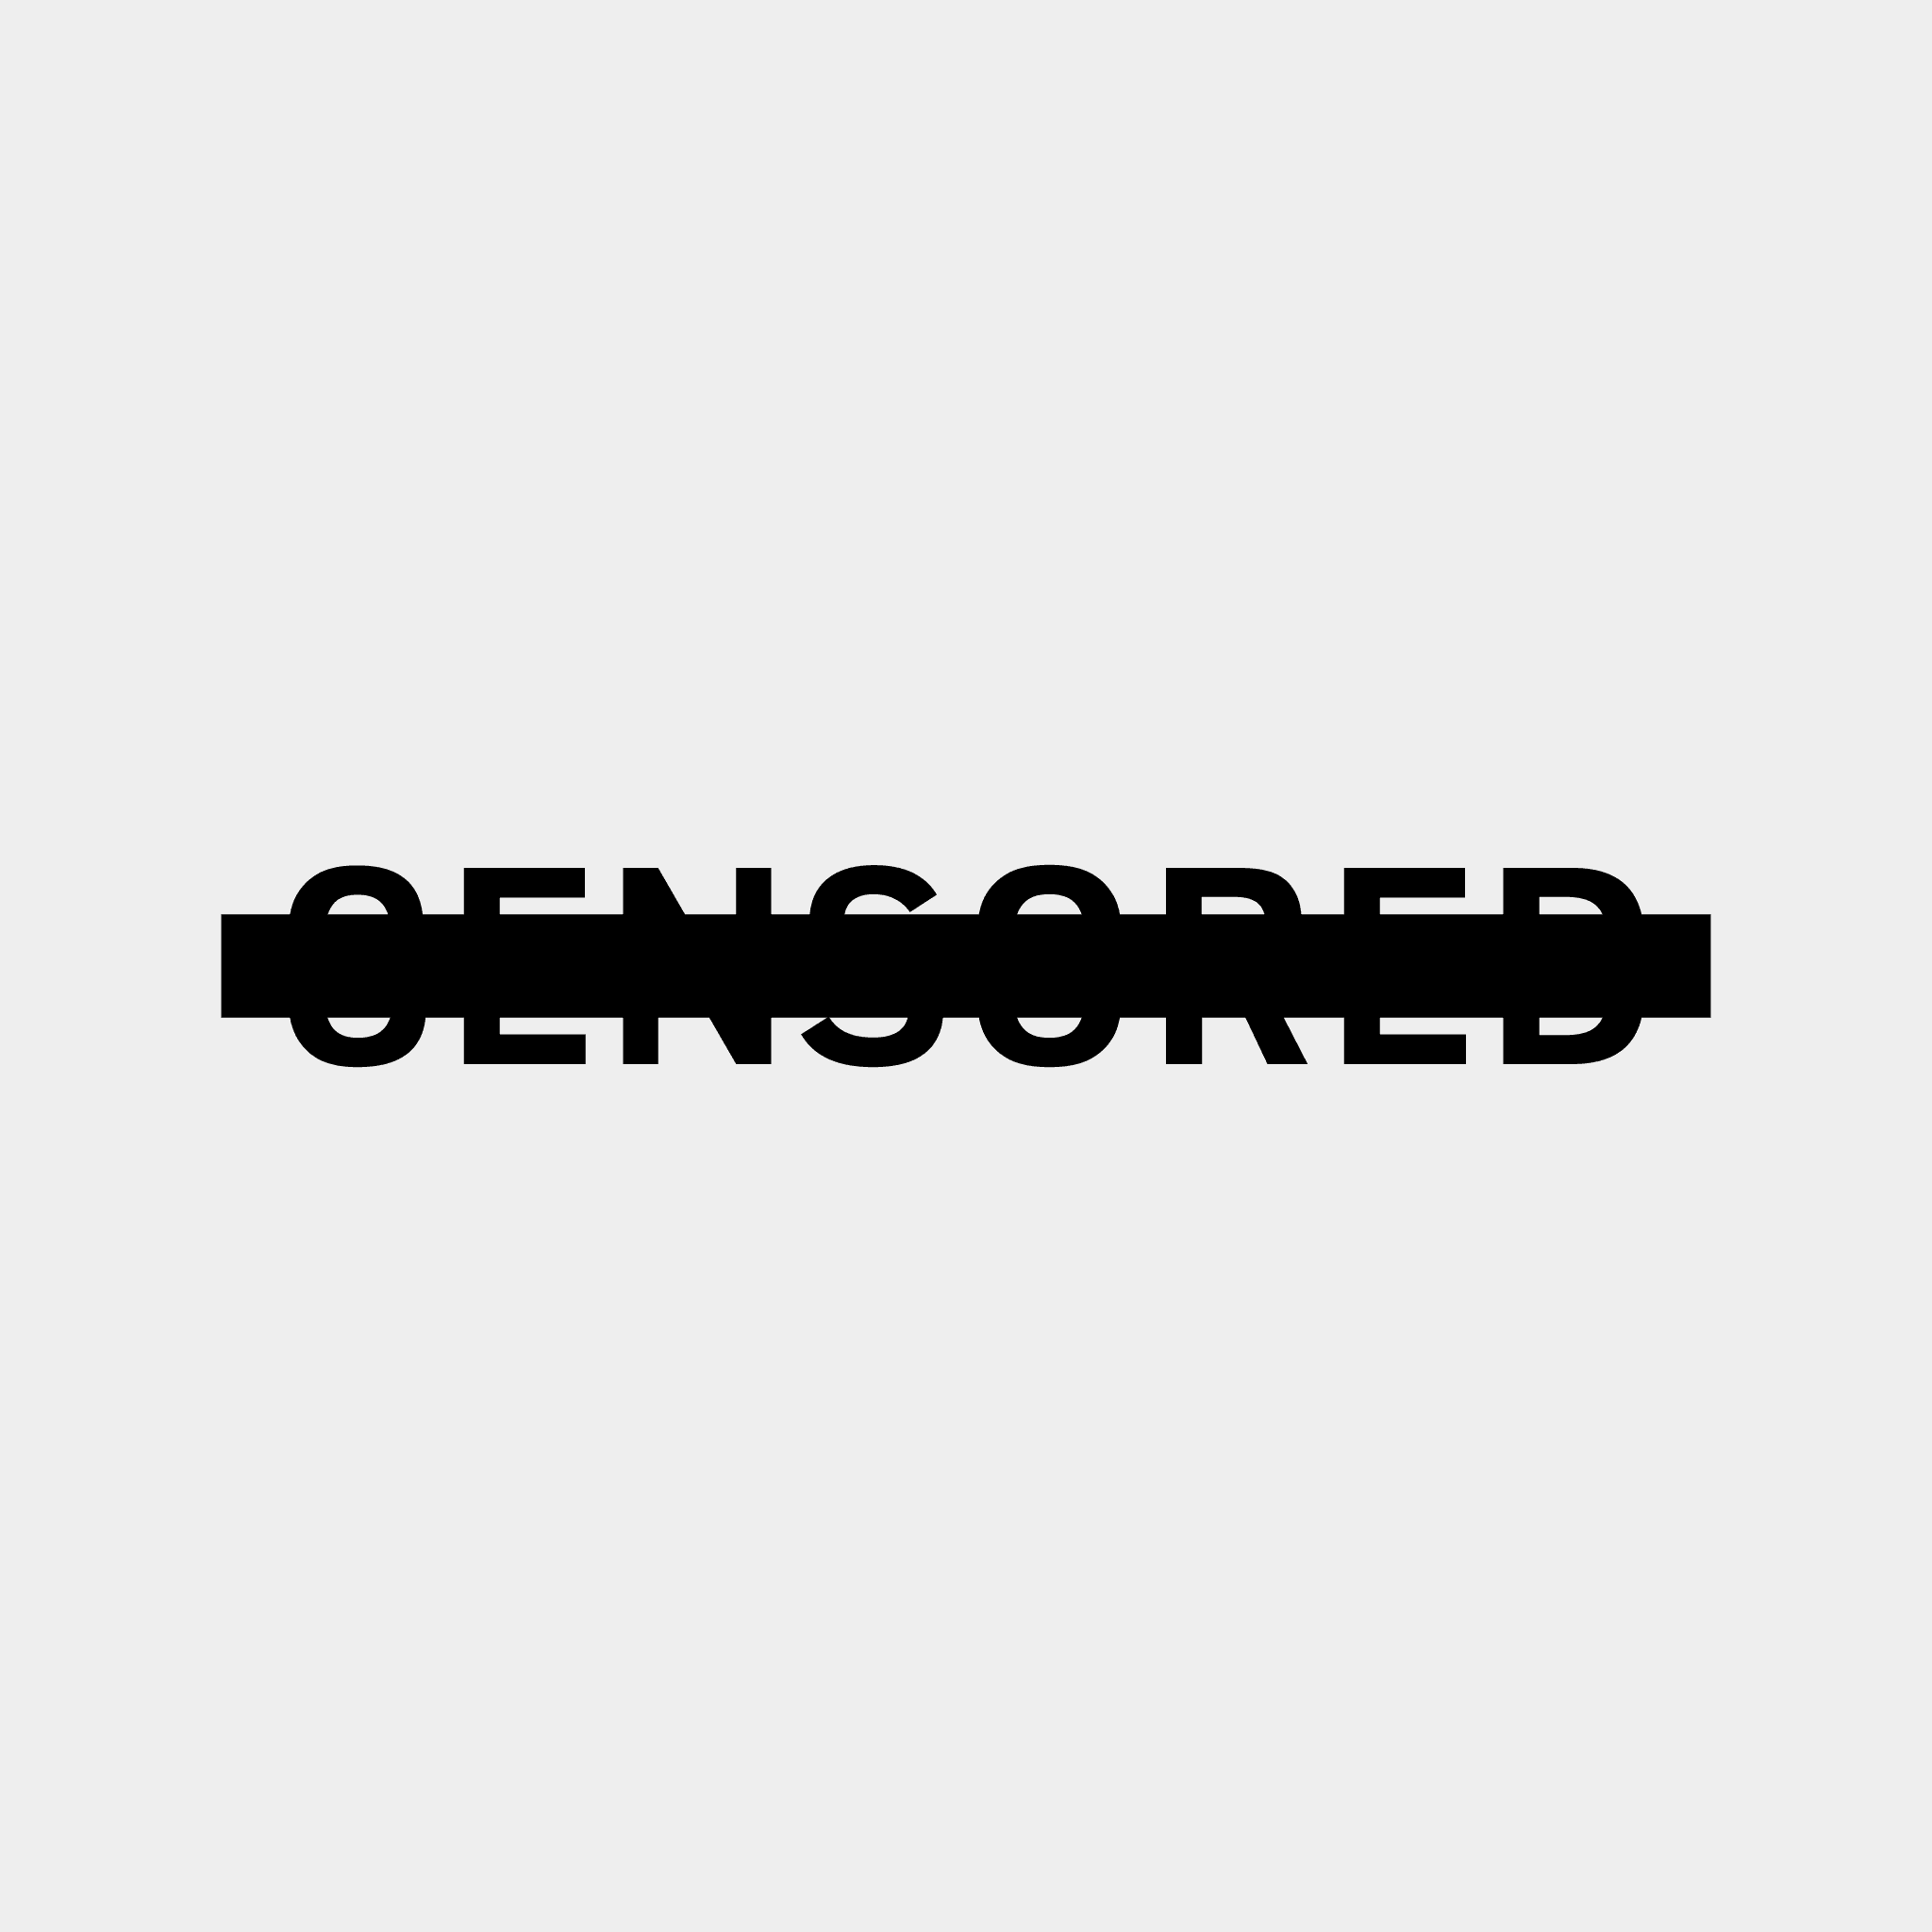 Censored*